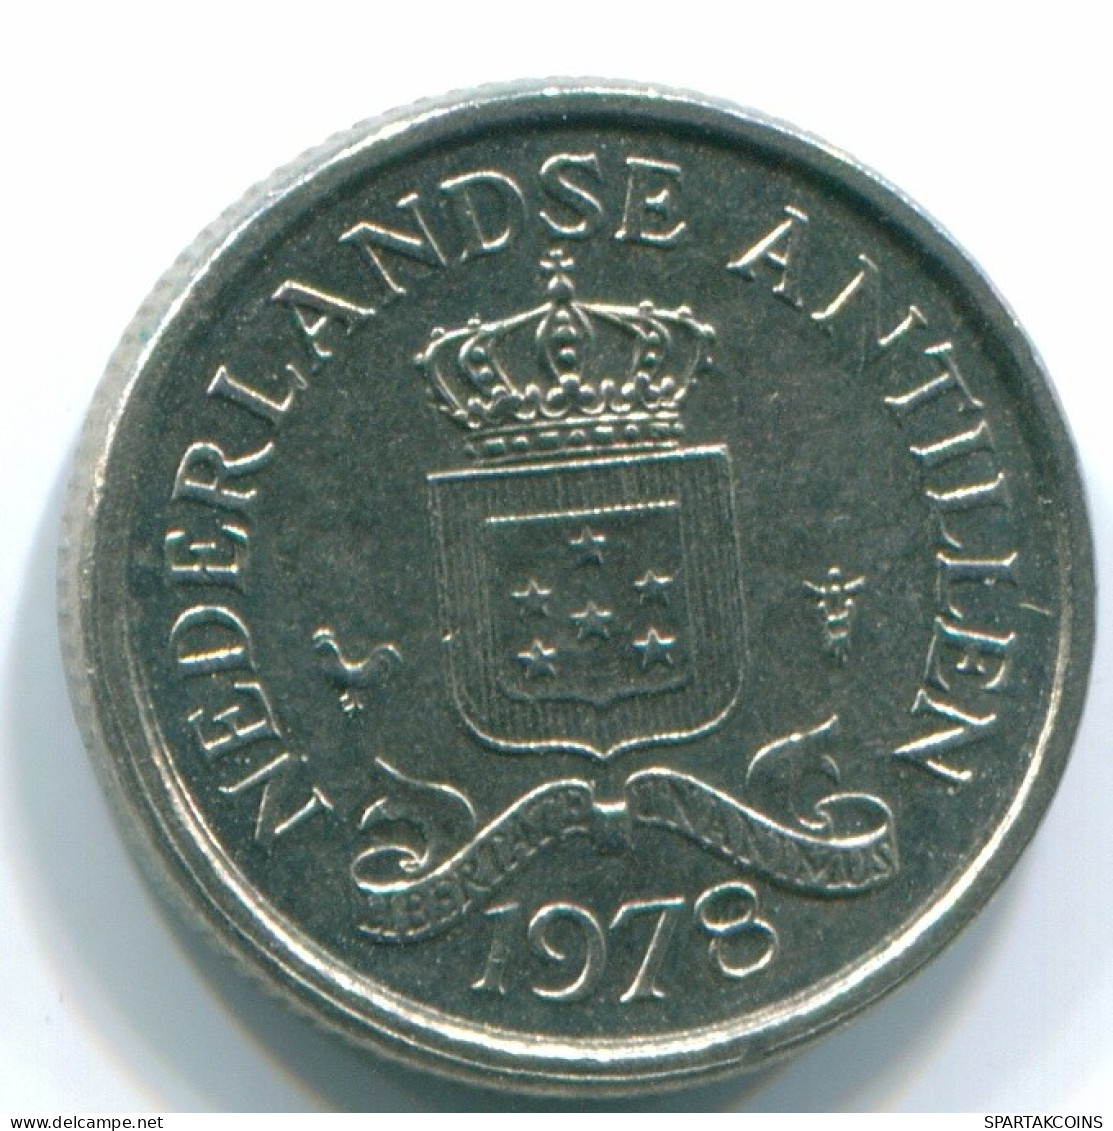 10 CENTS 1978 NETHERLANDS ANTILLES Nickel Colonial Coin #S13548.U.A - Nederlandse Antillen